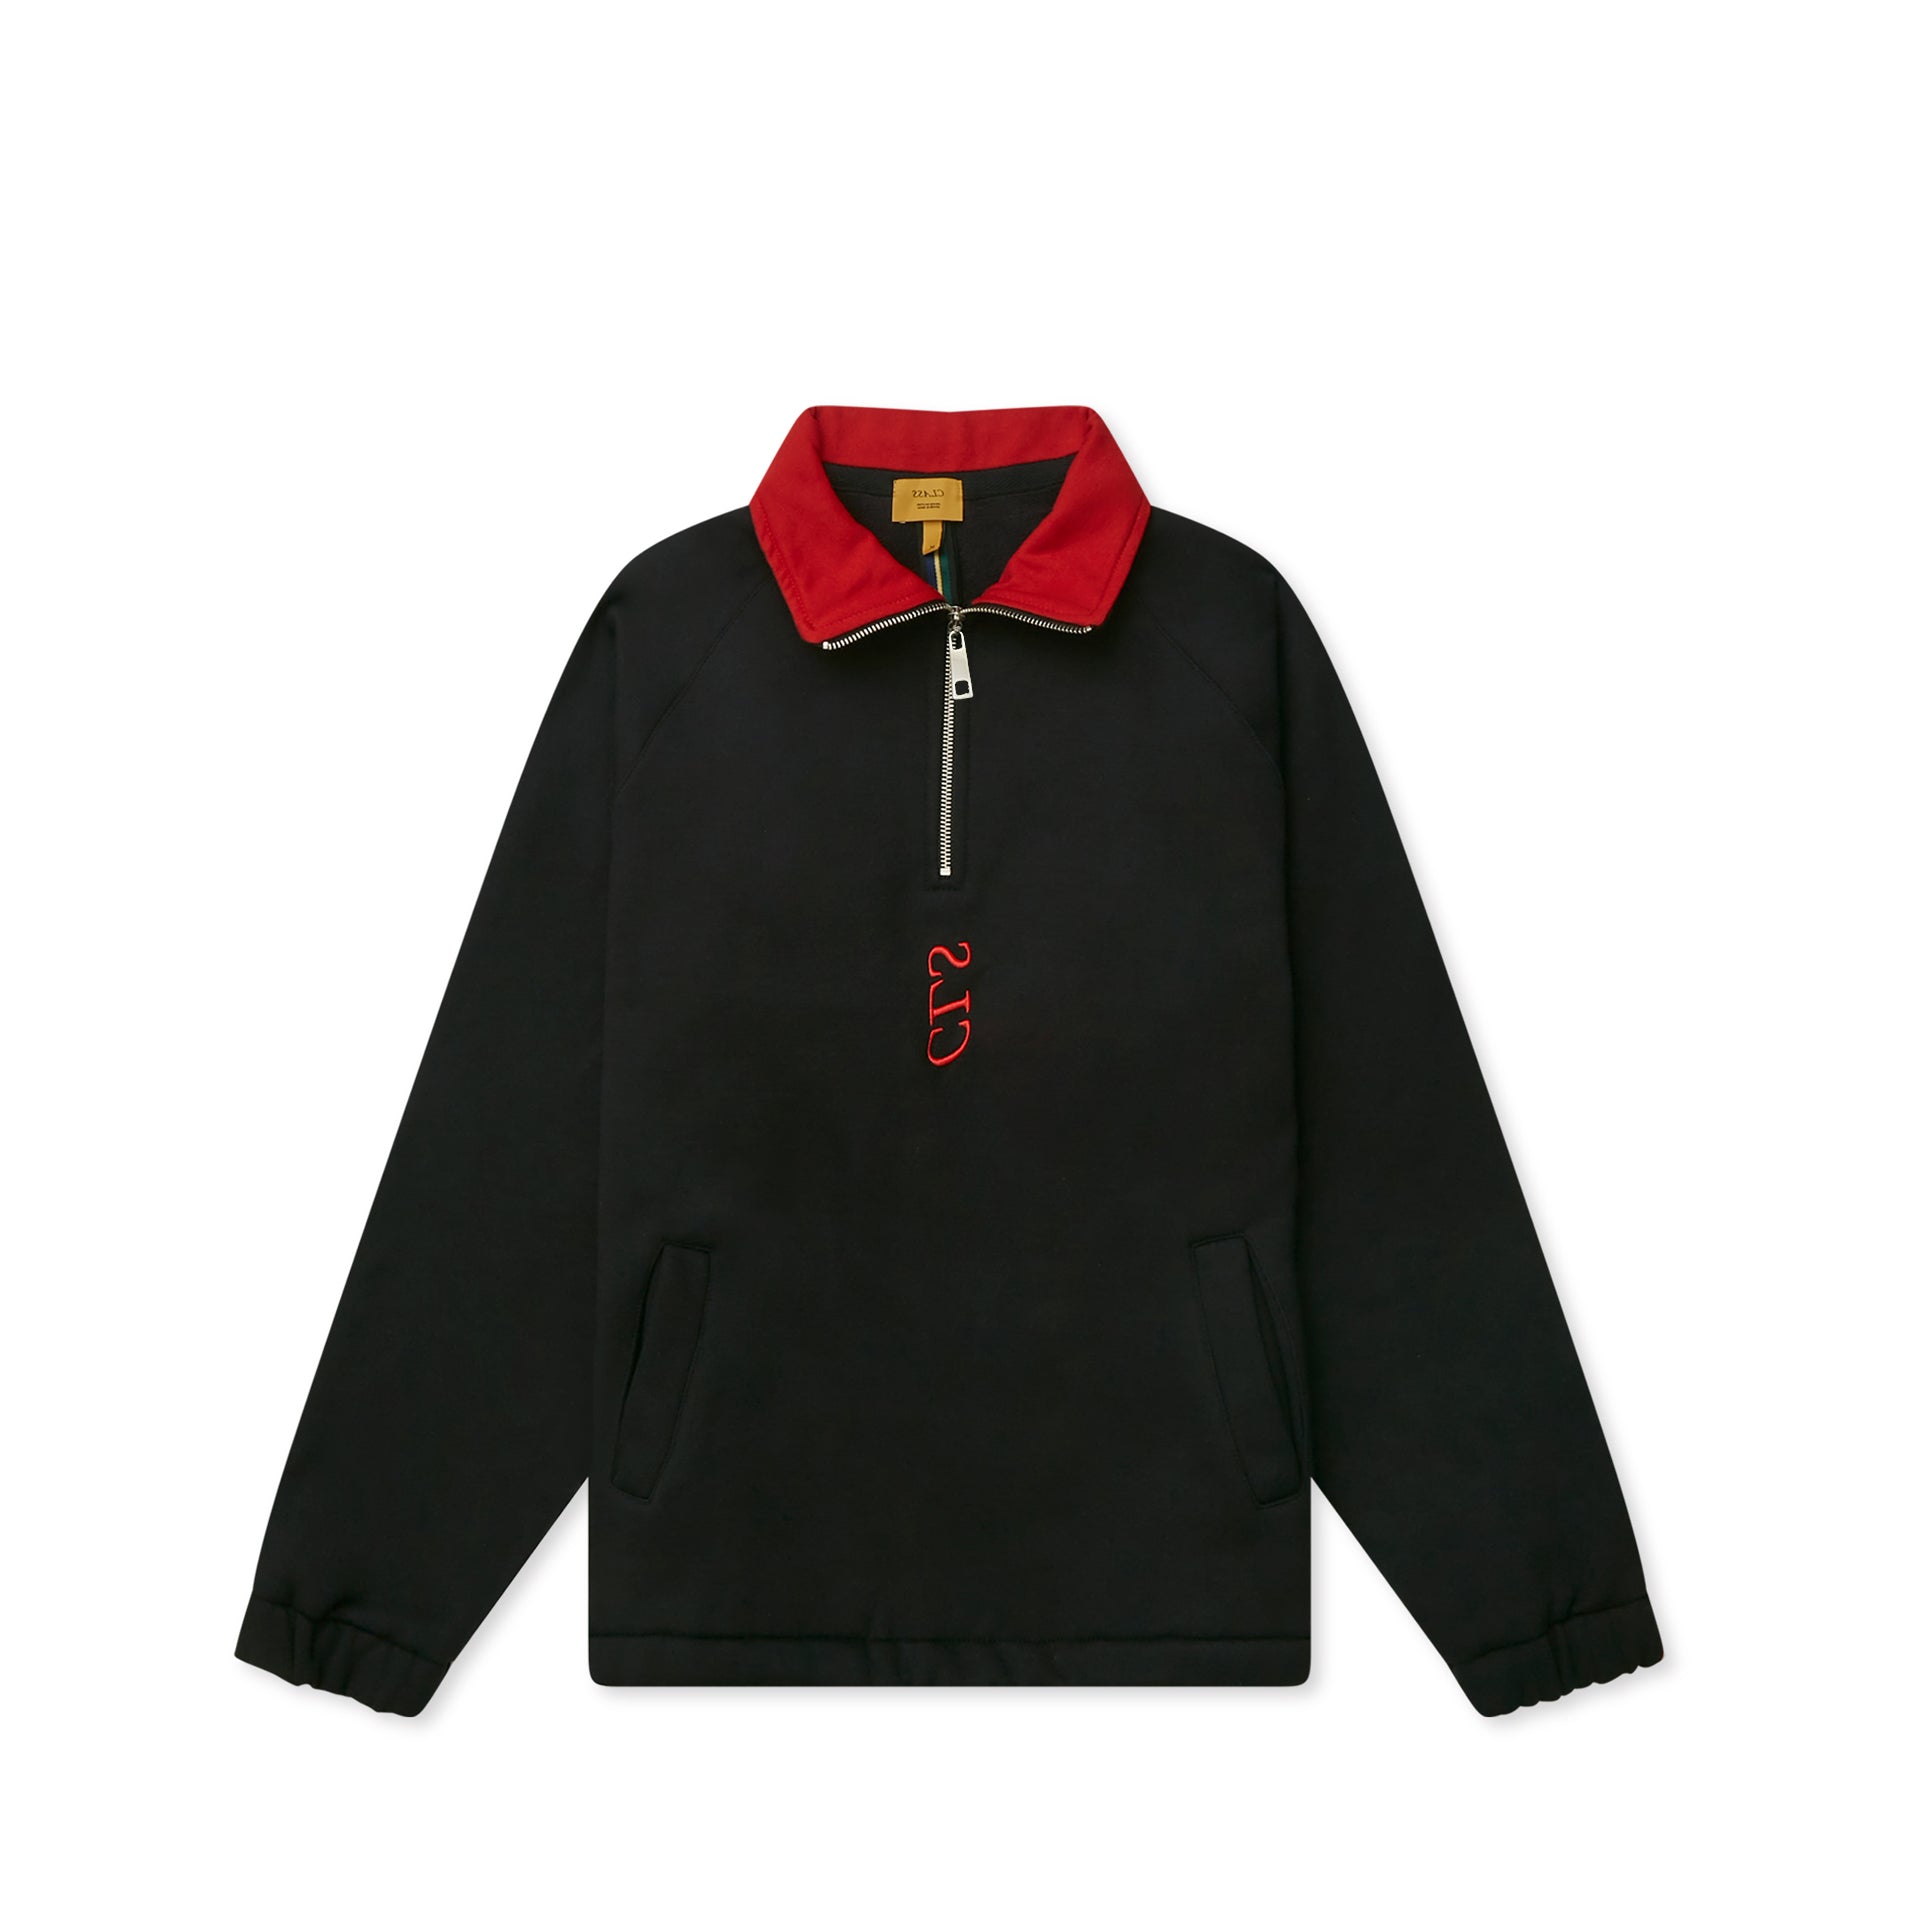 CLASS - Paladio Sweatshirt Black & Red